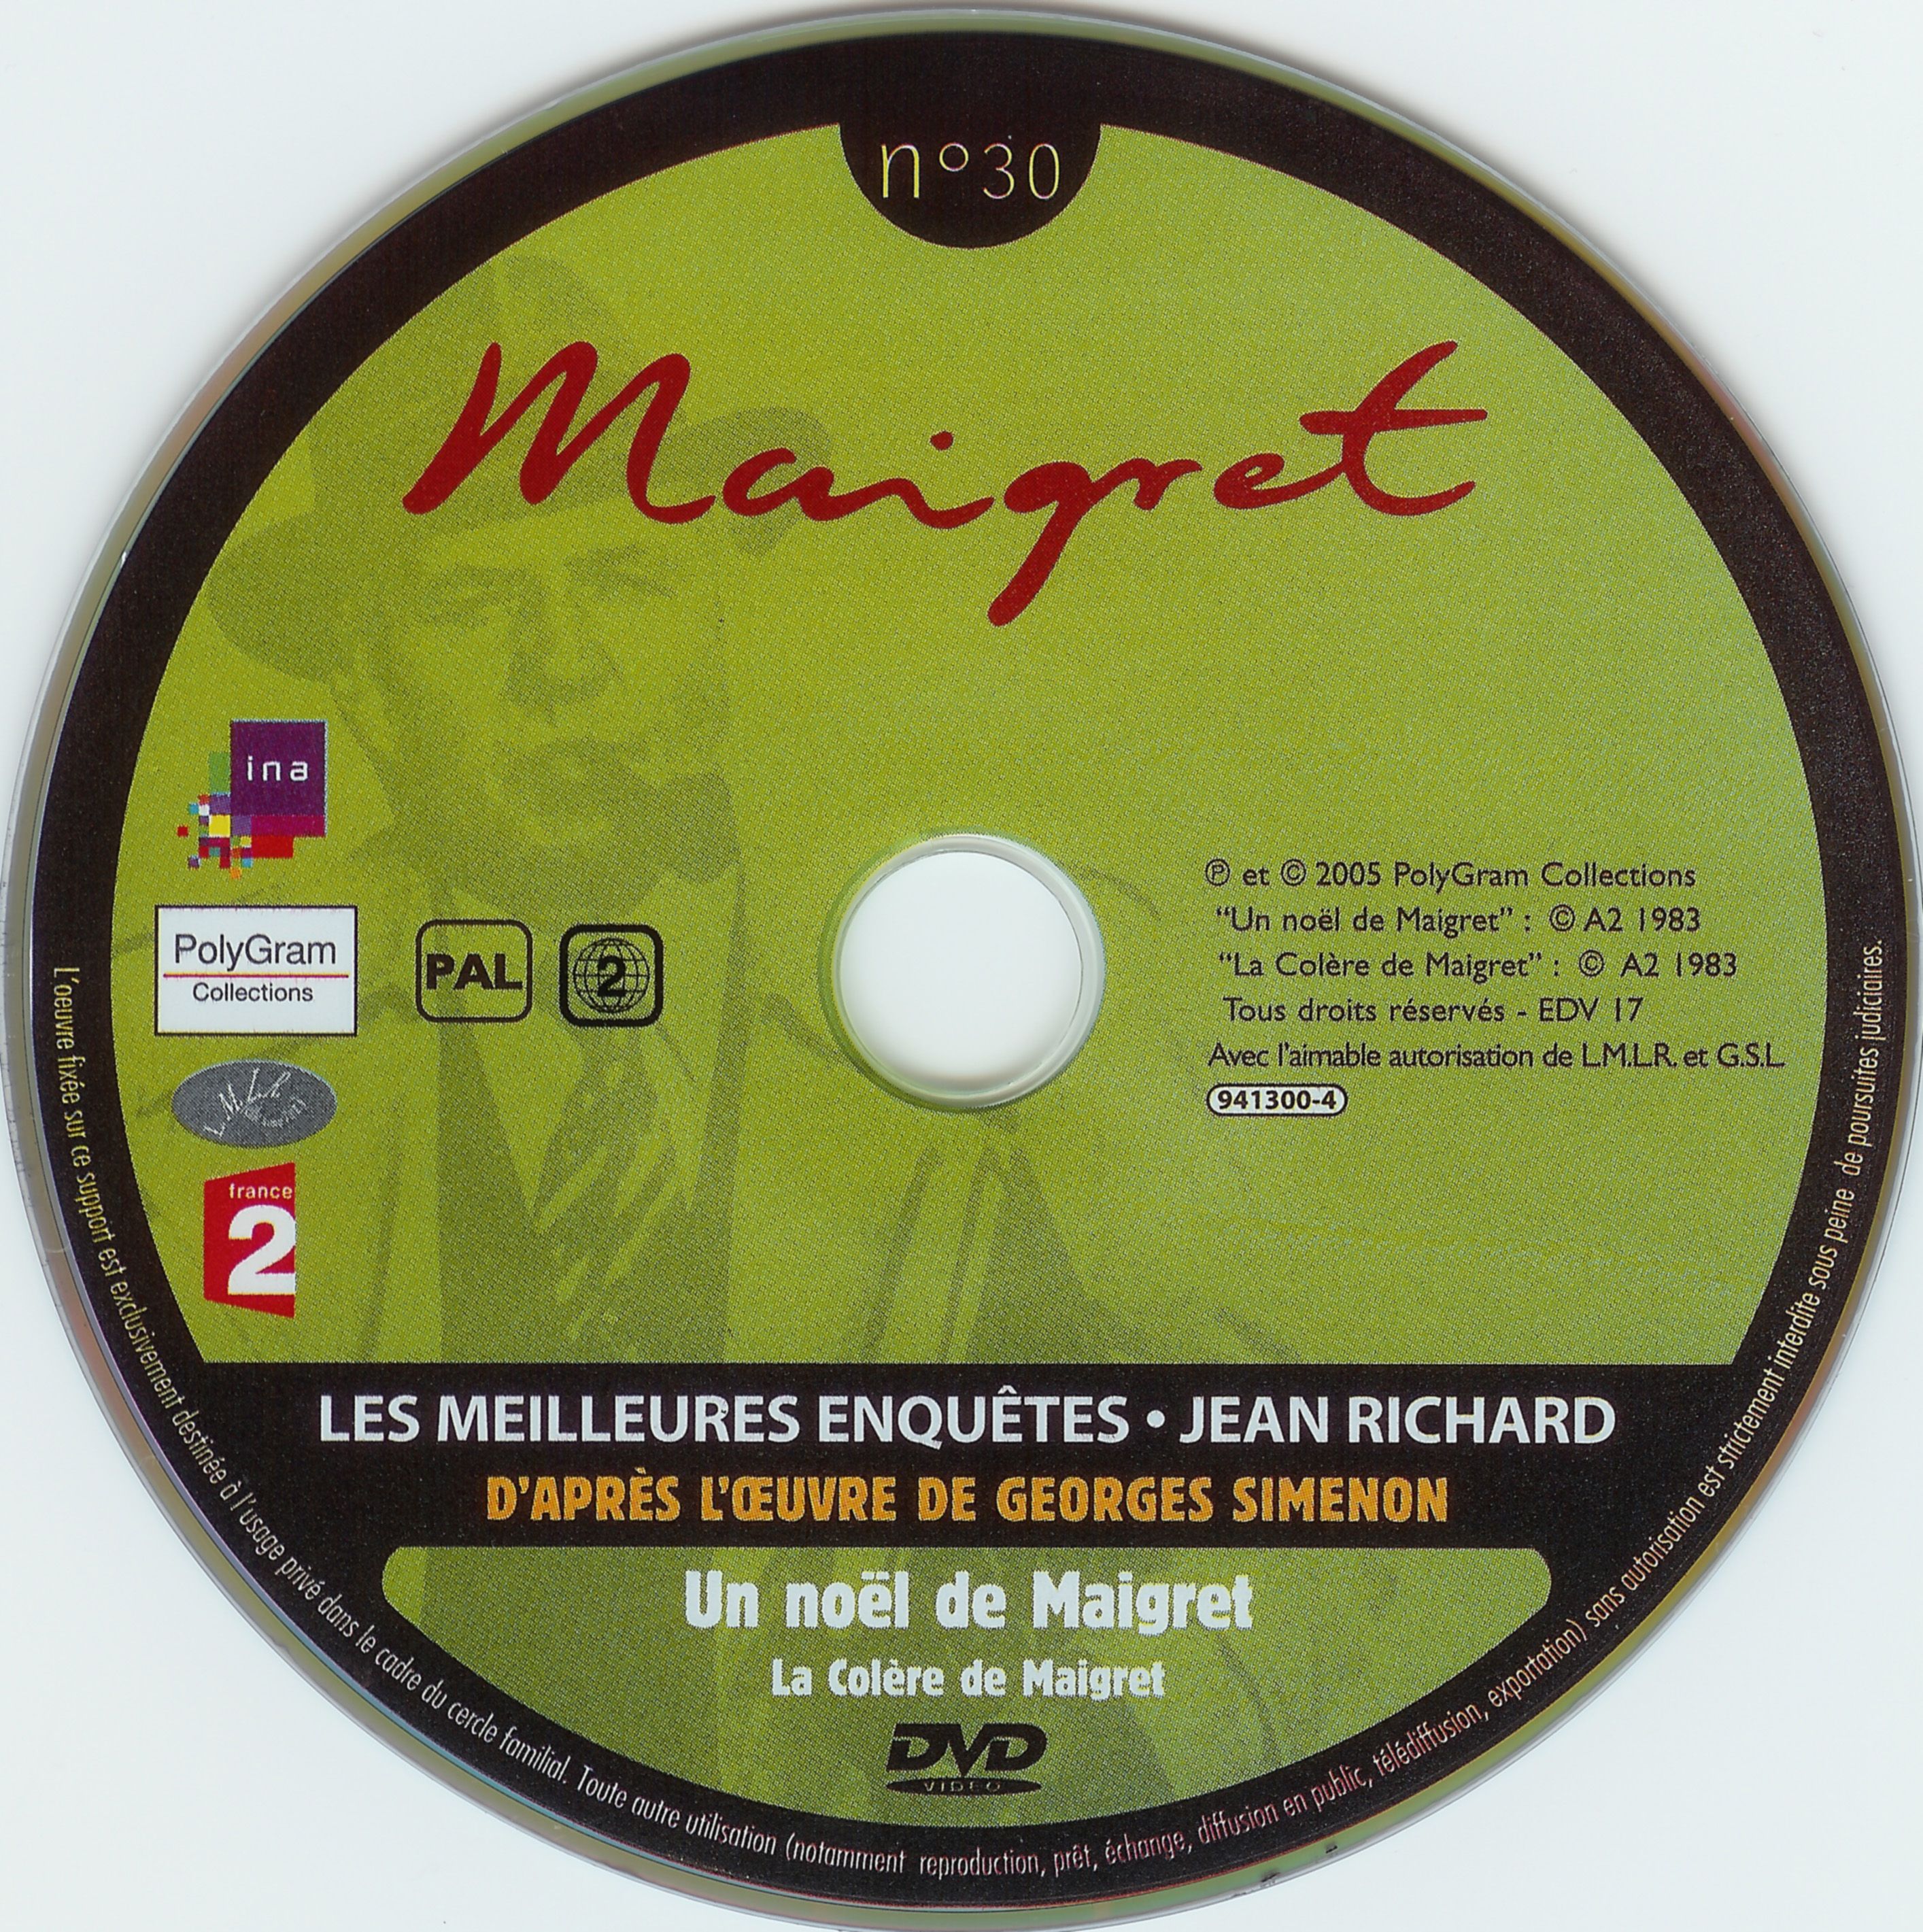 Maigret (Jean Richard) vol 30